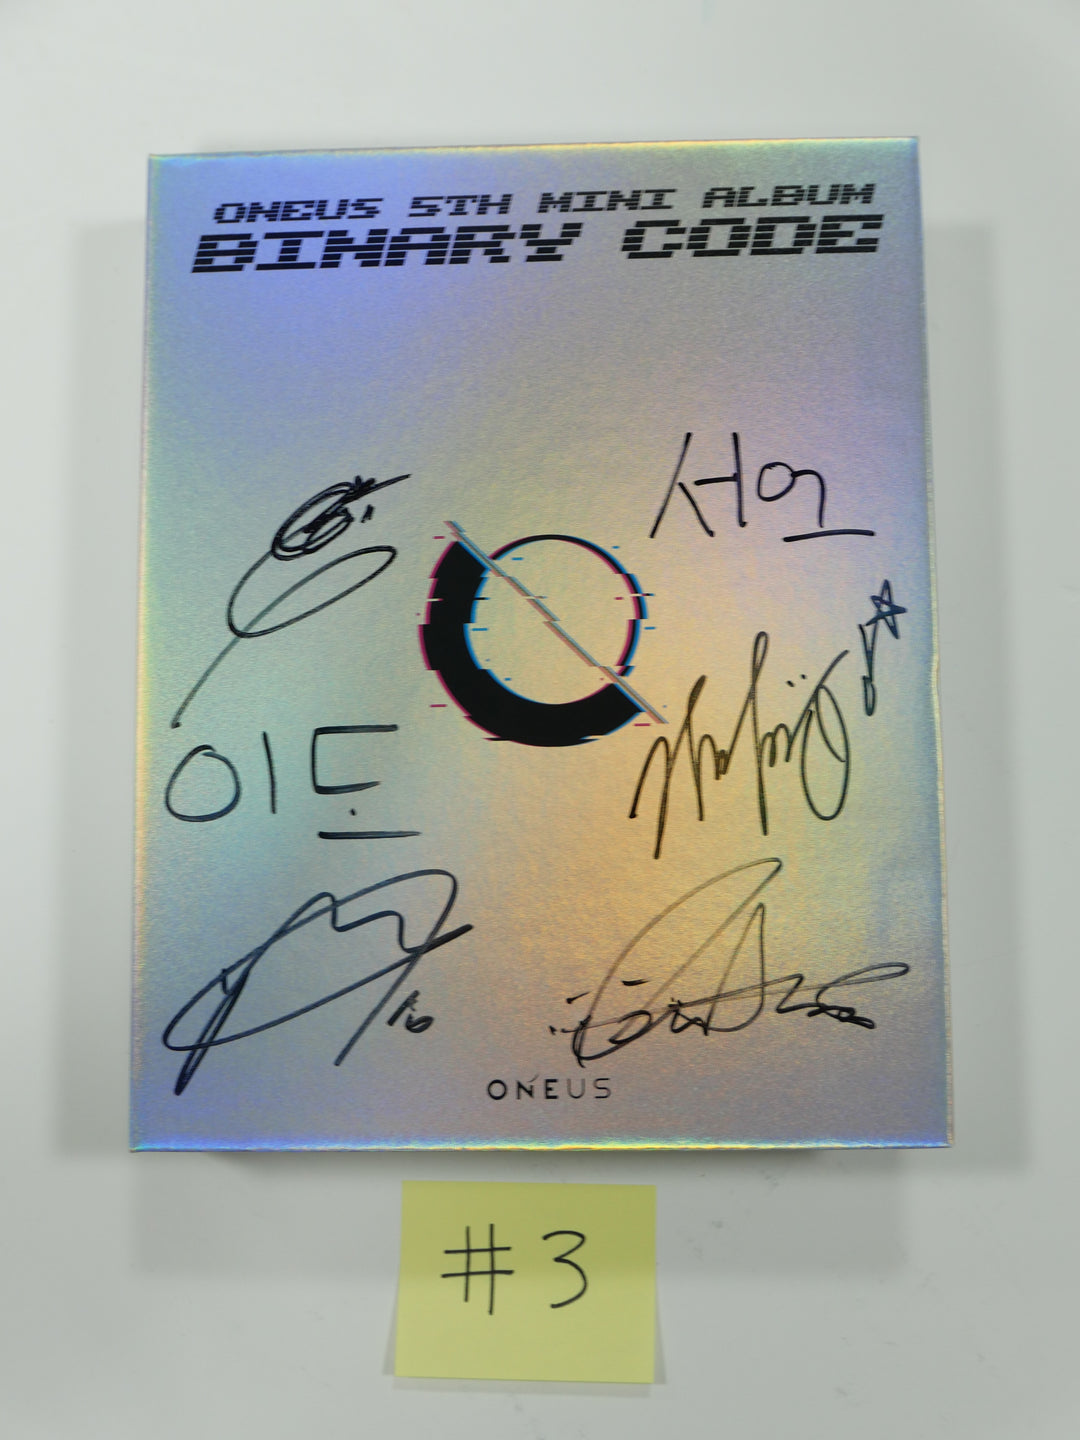 Oneus "Binary Code" 5th Mini - Hand Autographed(Signed) Promo Album